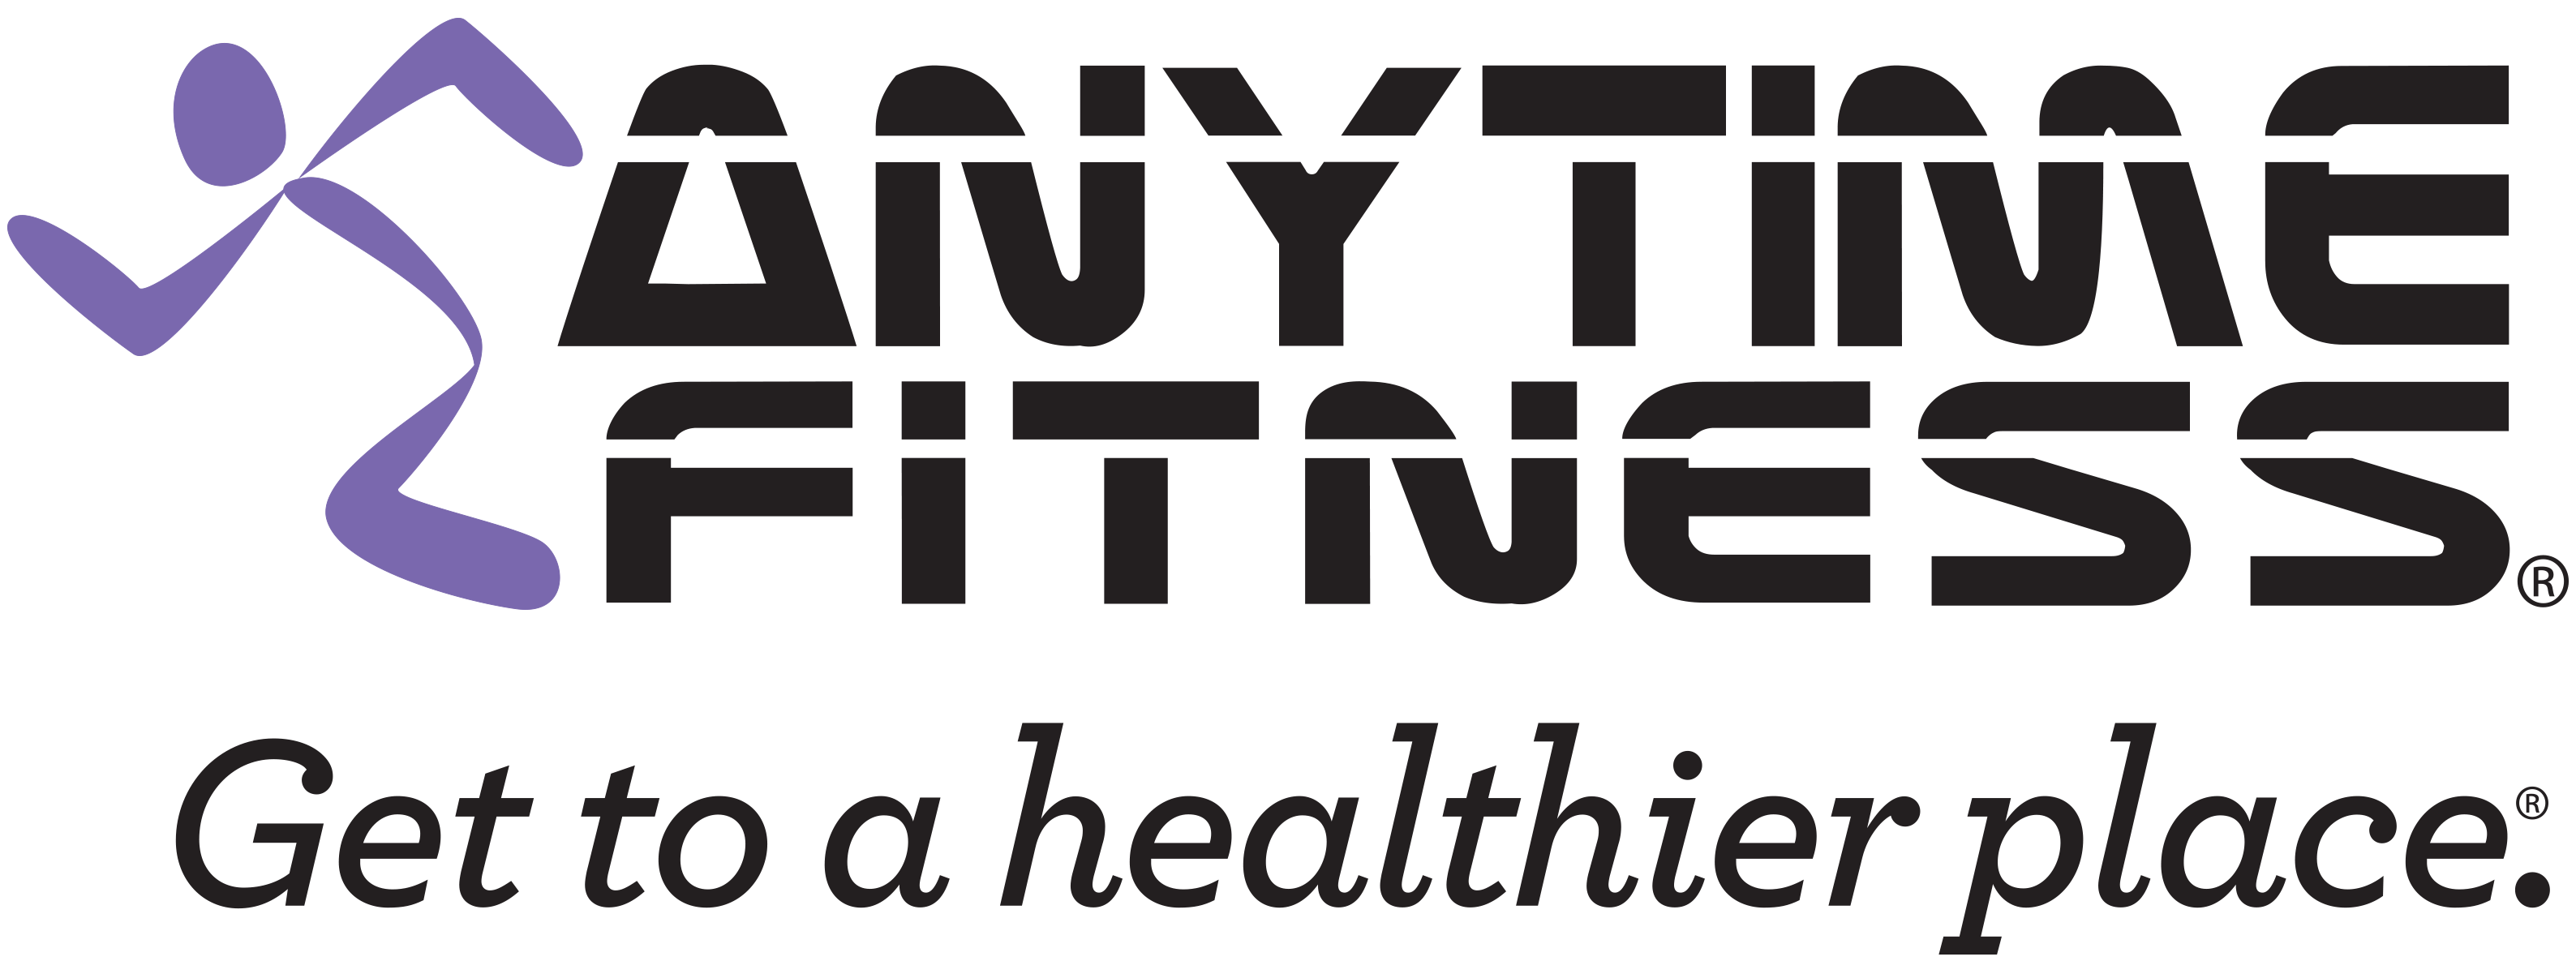 wellness and fitness company